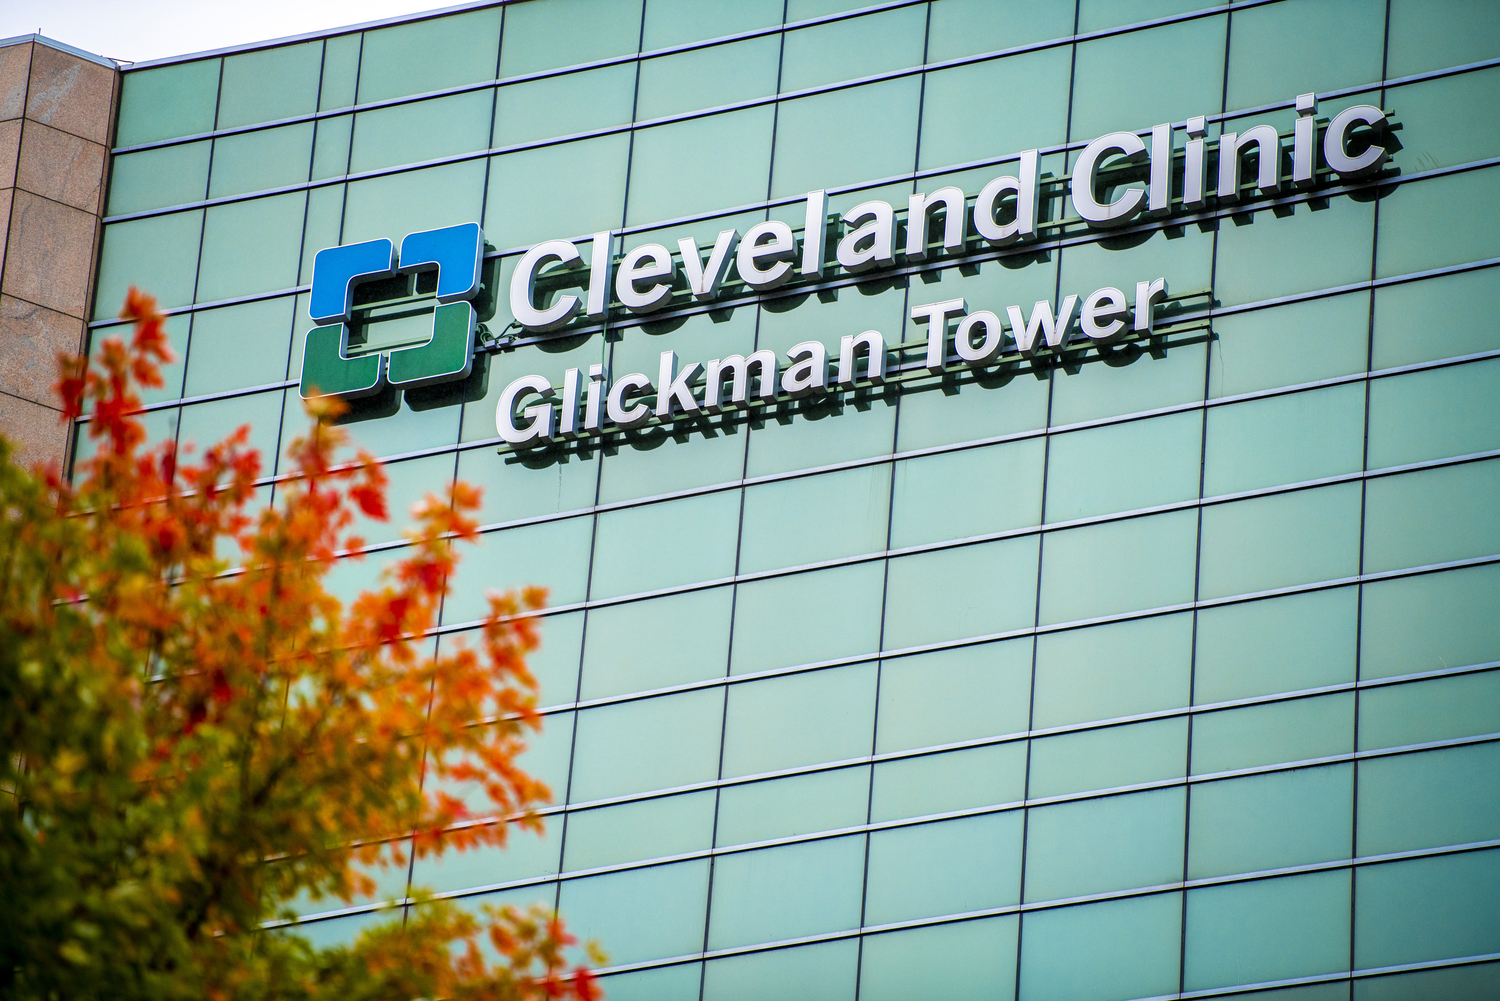 Glickman Tower